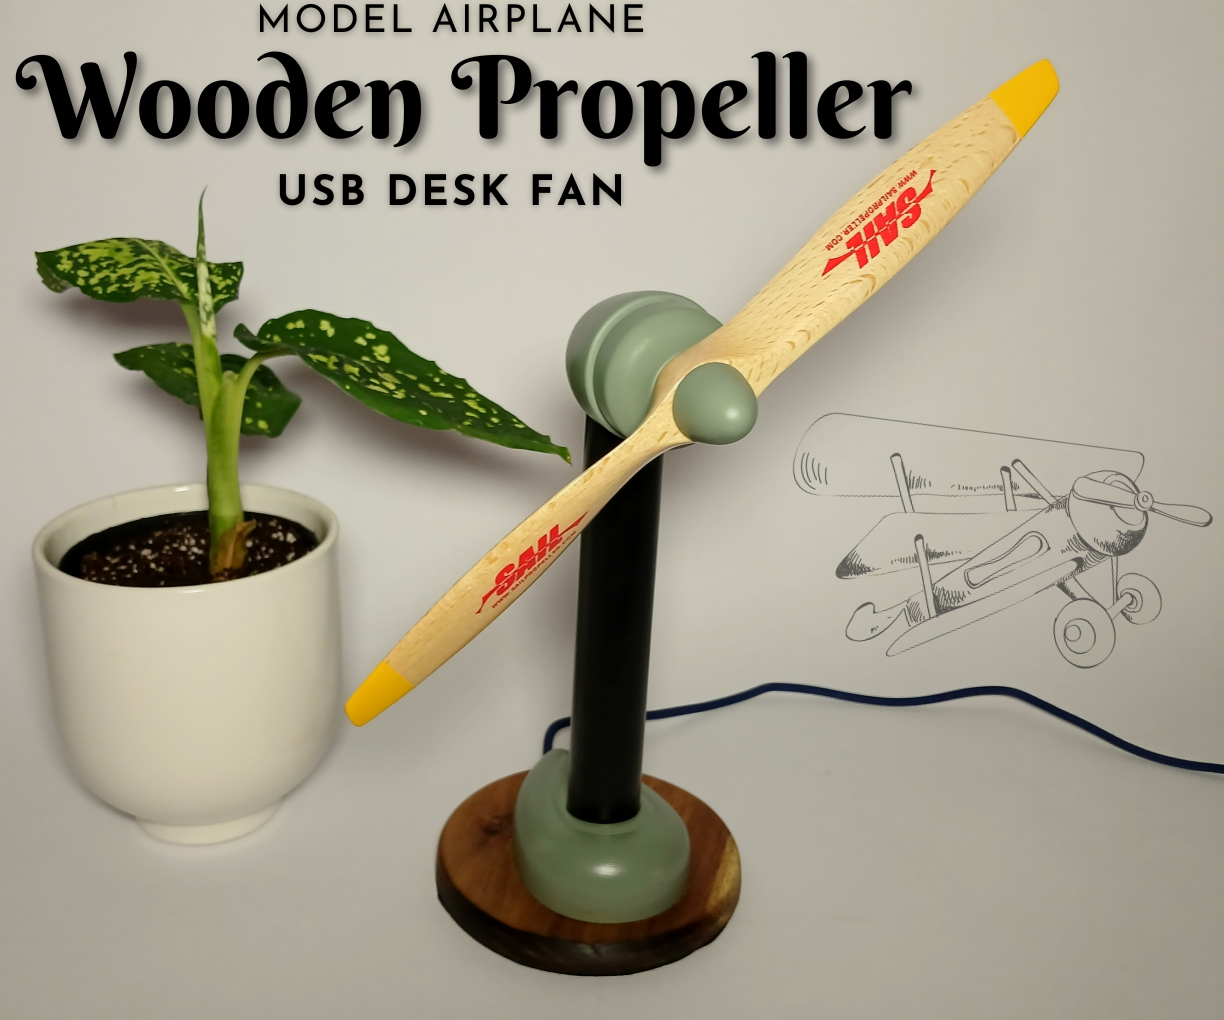 Make Your Own Wooden Propeller USB Desk Fan!